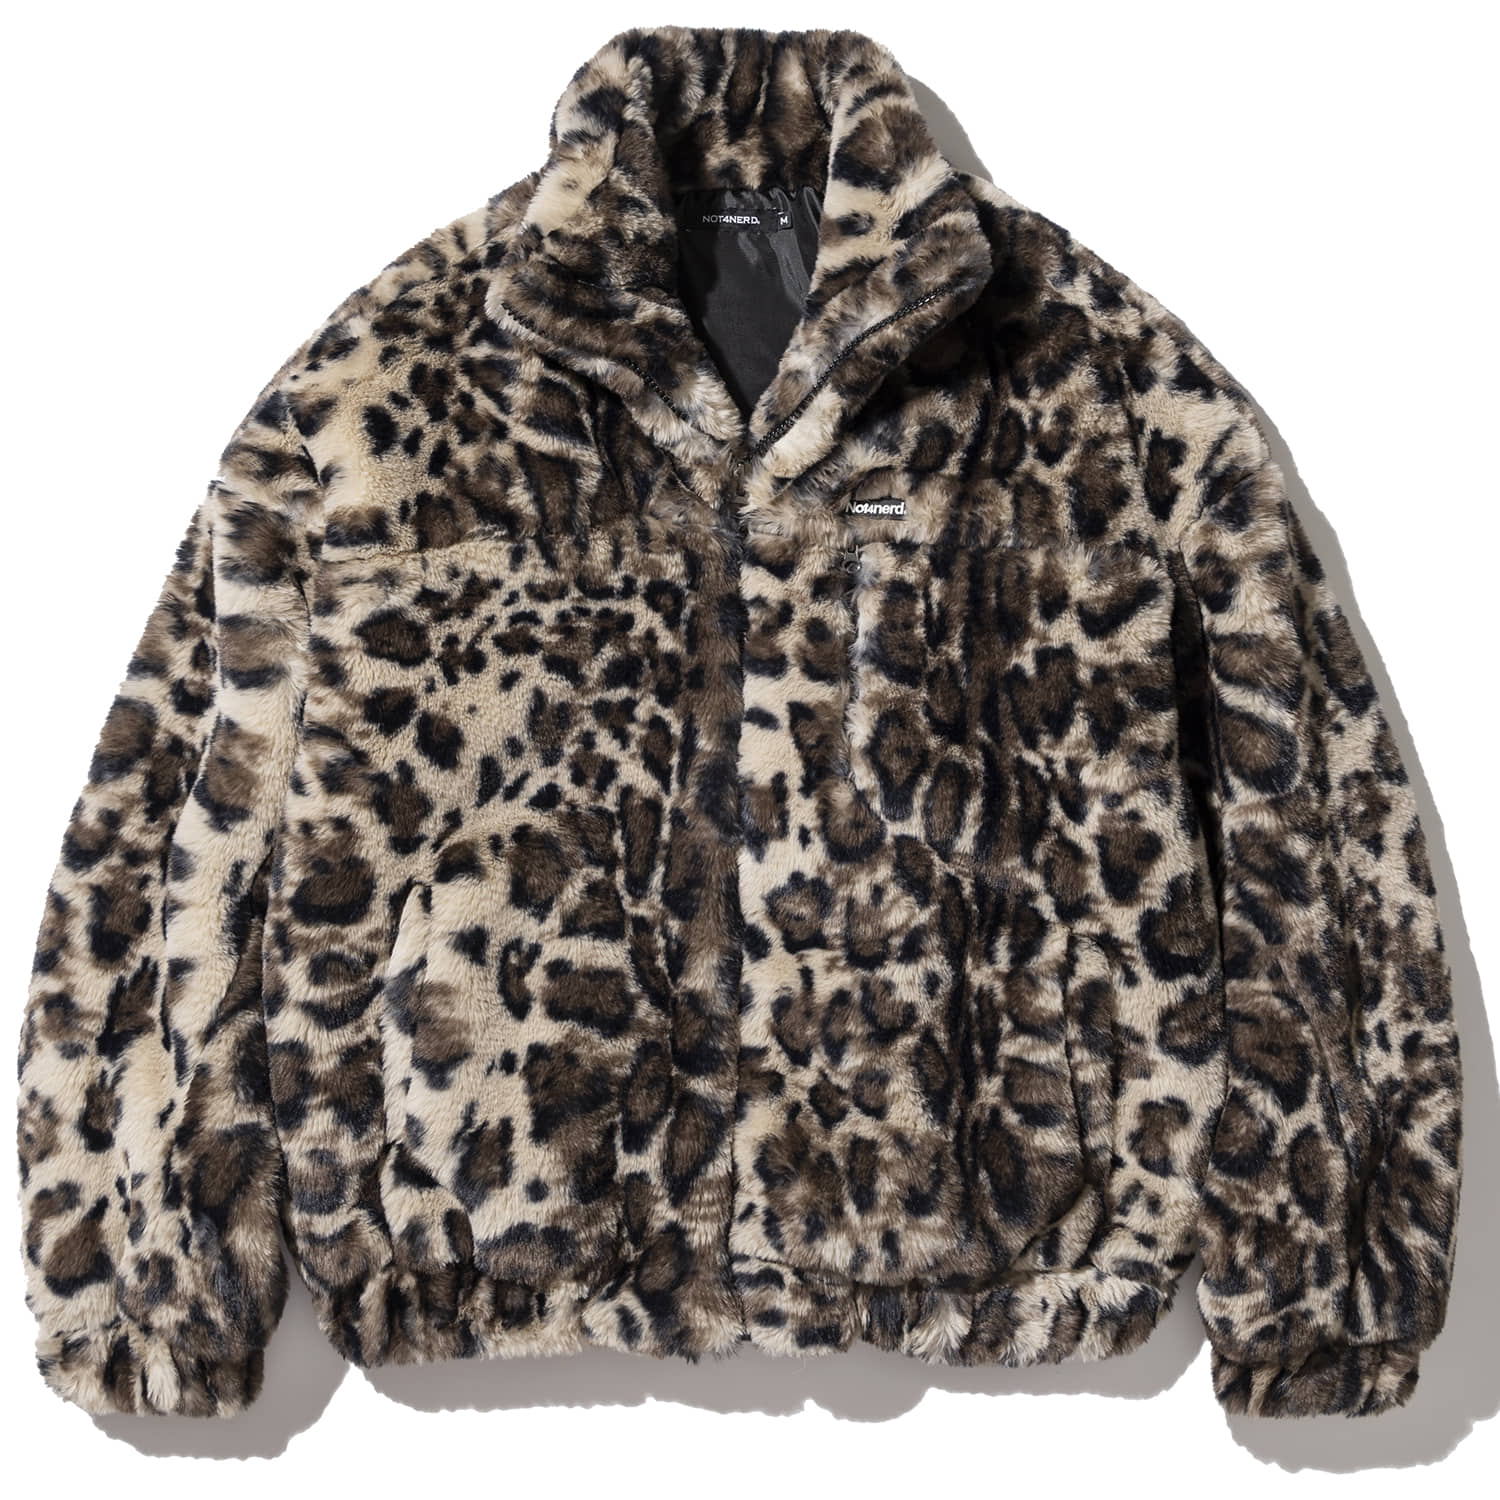 Symbol Fur Jacket Leopard,NOT4NERD